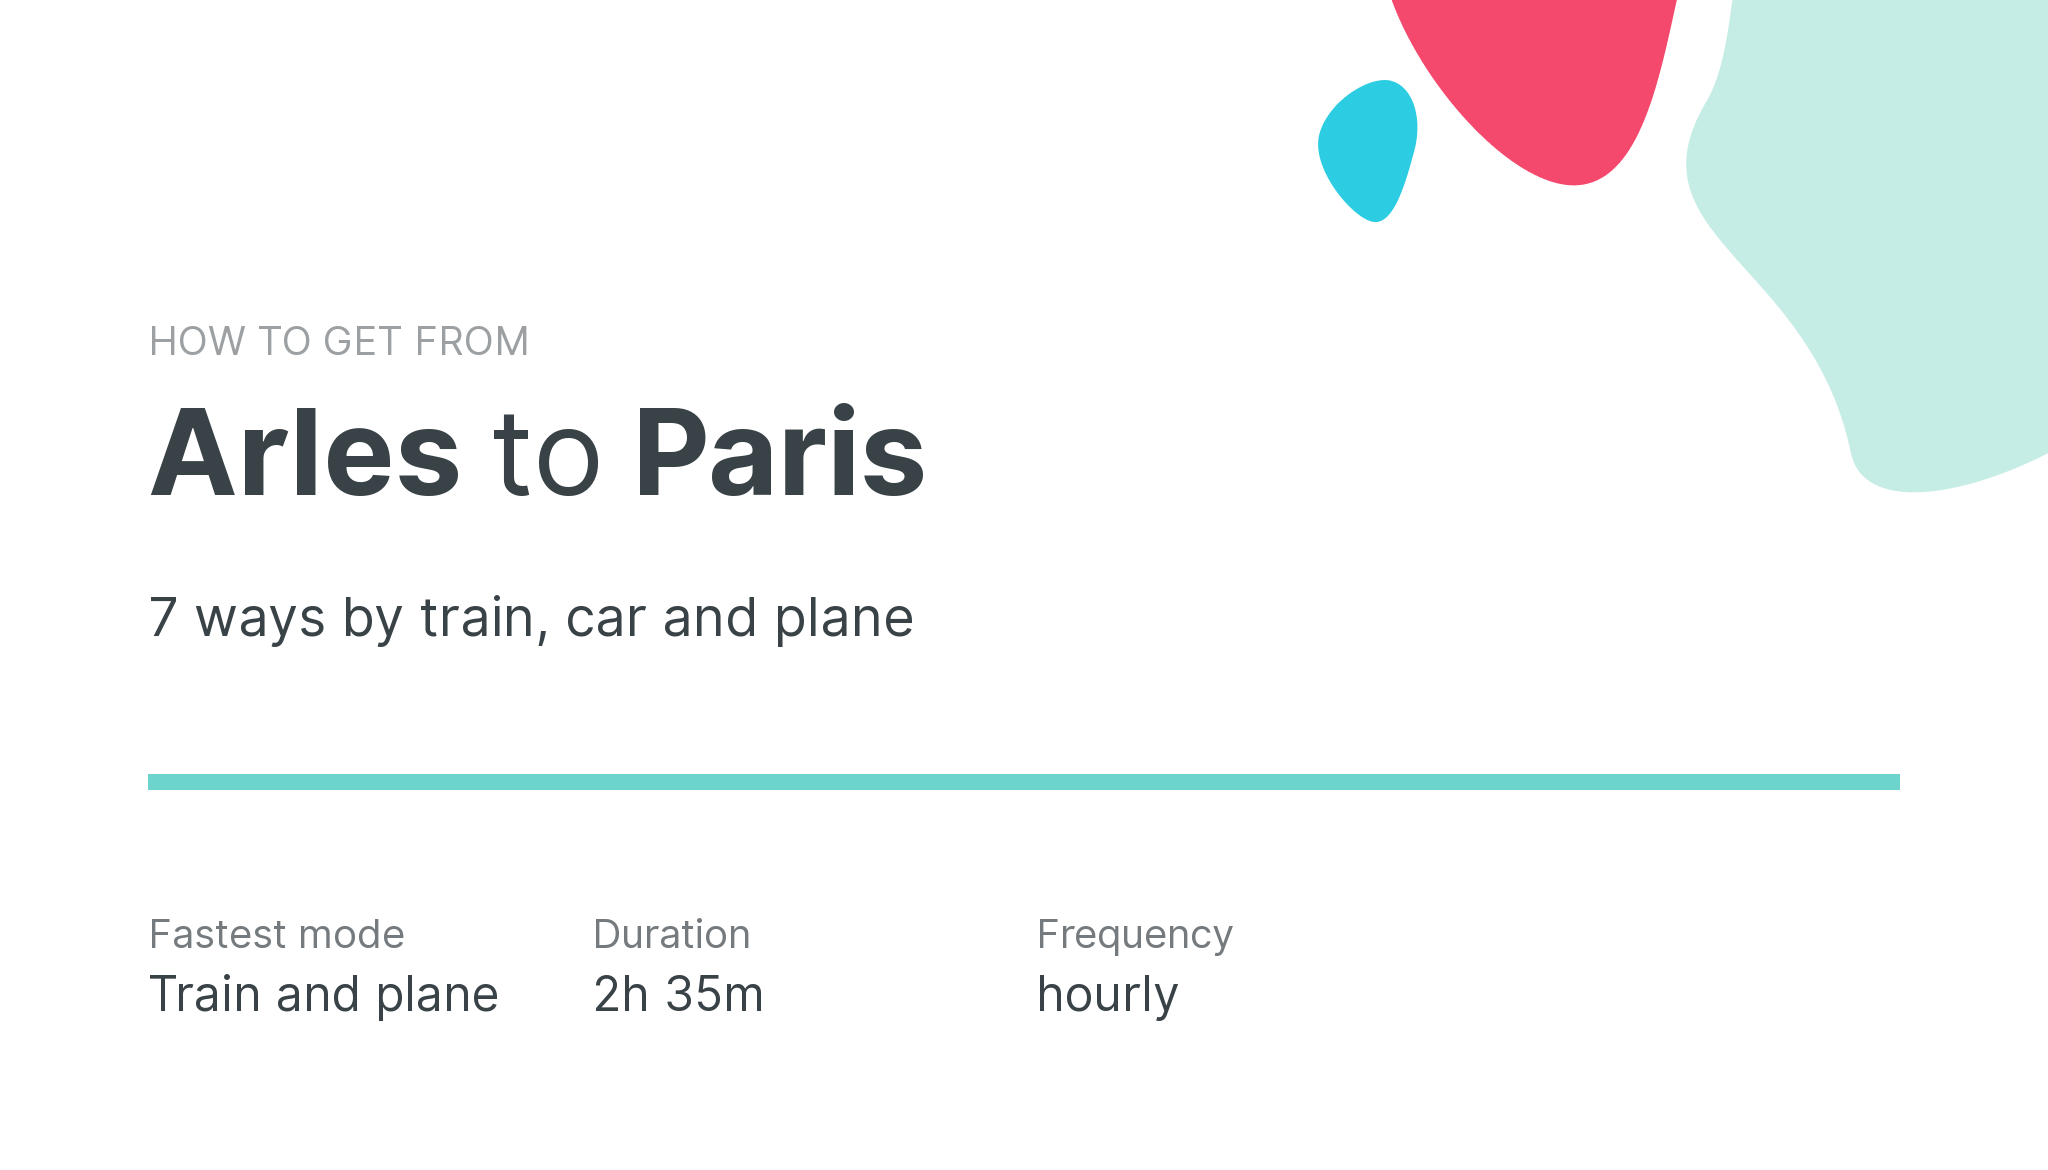 How do I get from Arles to Paris